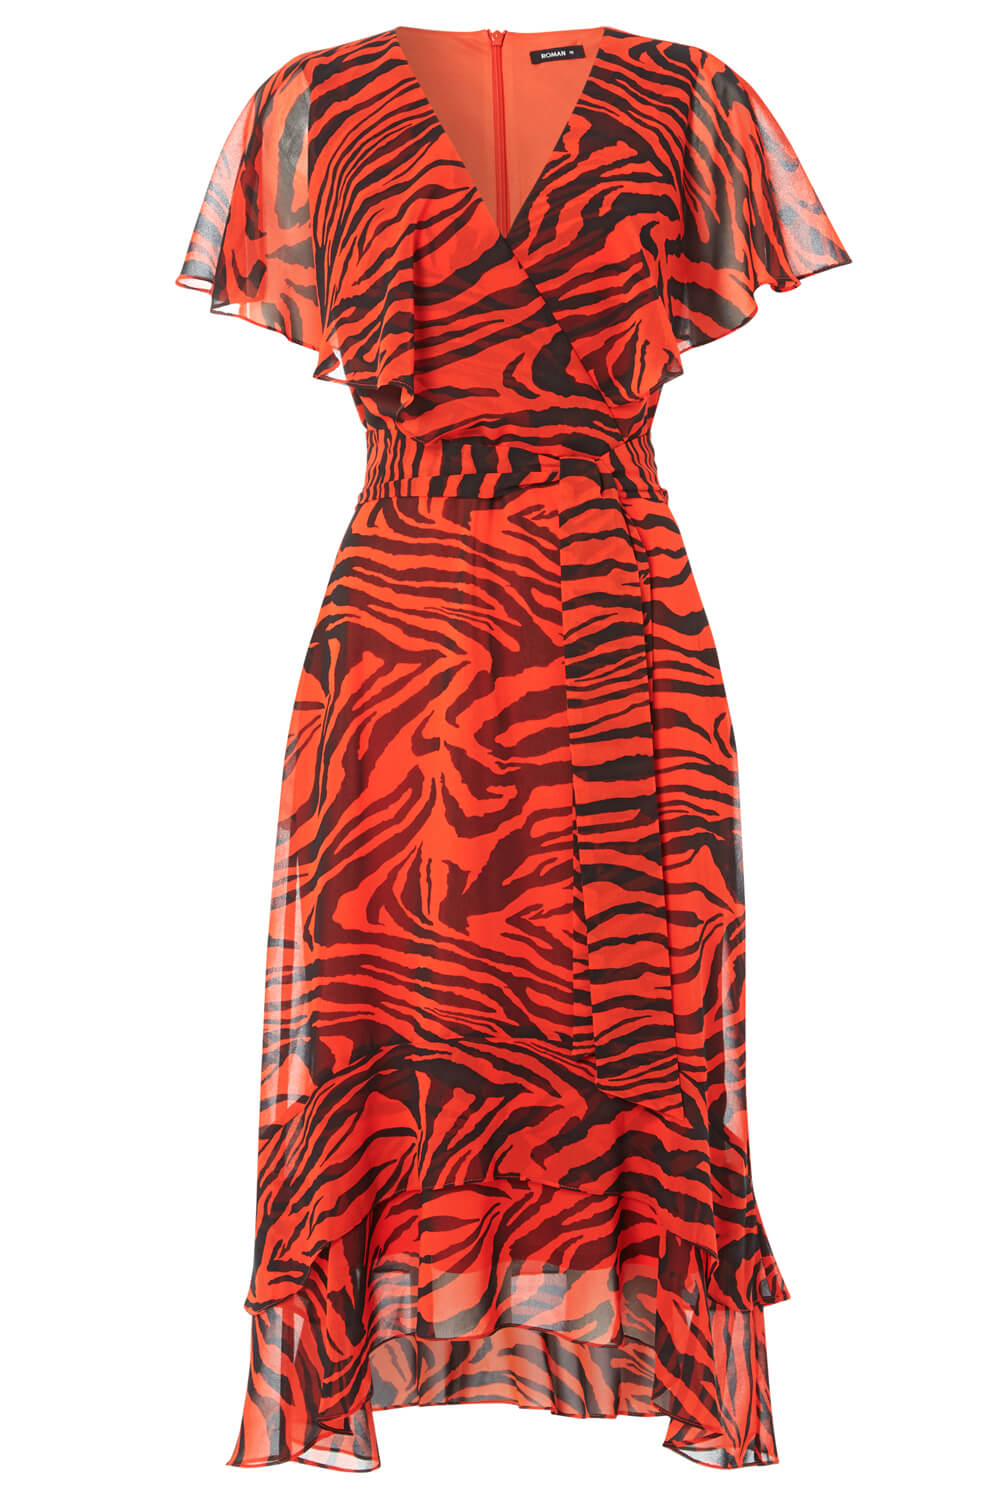 ORANGE Tiger Print Tie Waist Chiffon Midi Dress, Image 5 of 5